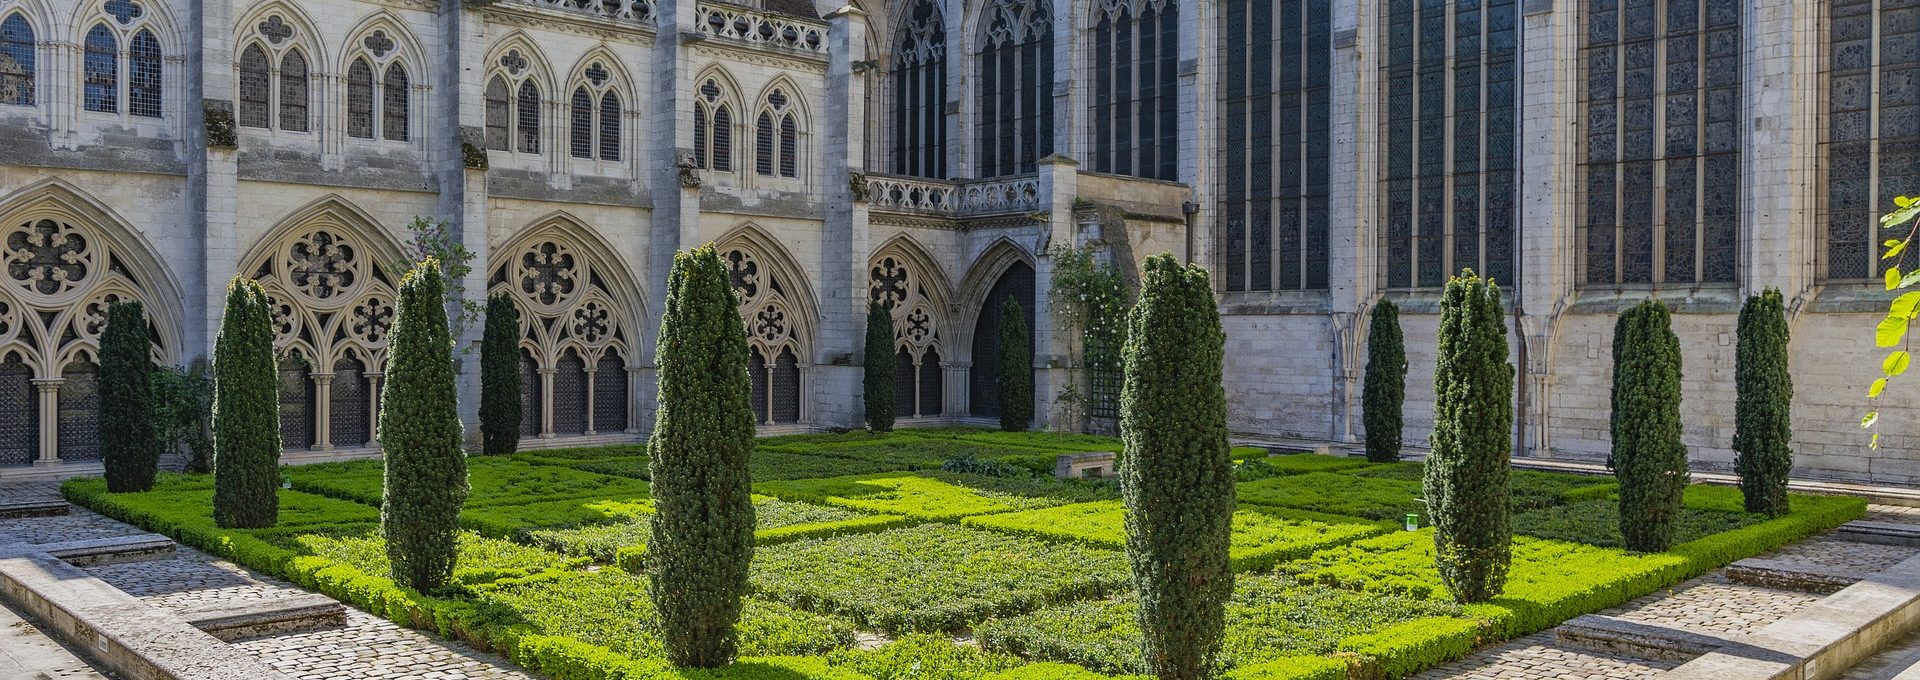 Catedral de Rouen na França